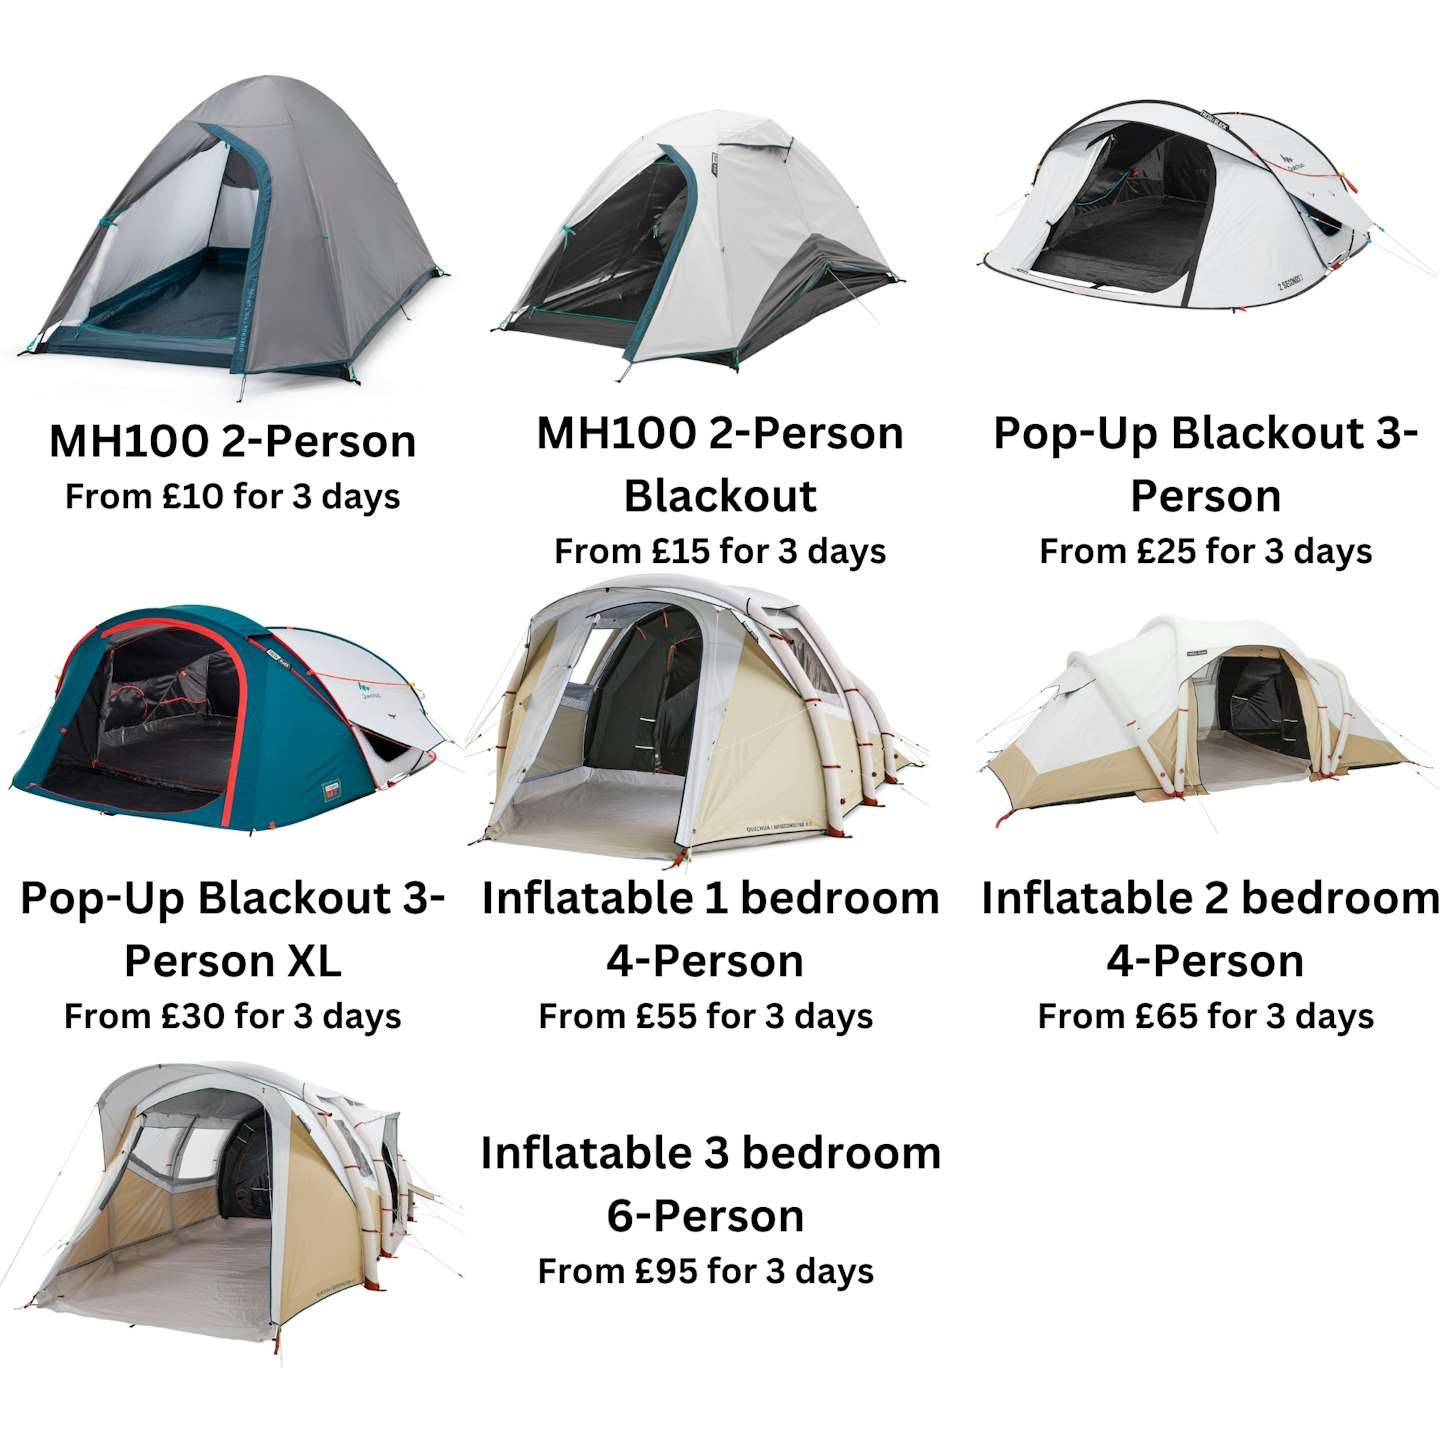 Decathlon's camping tent rental options